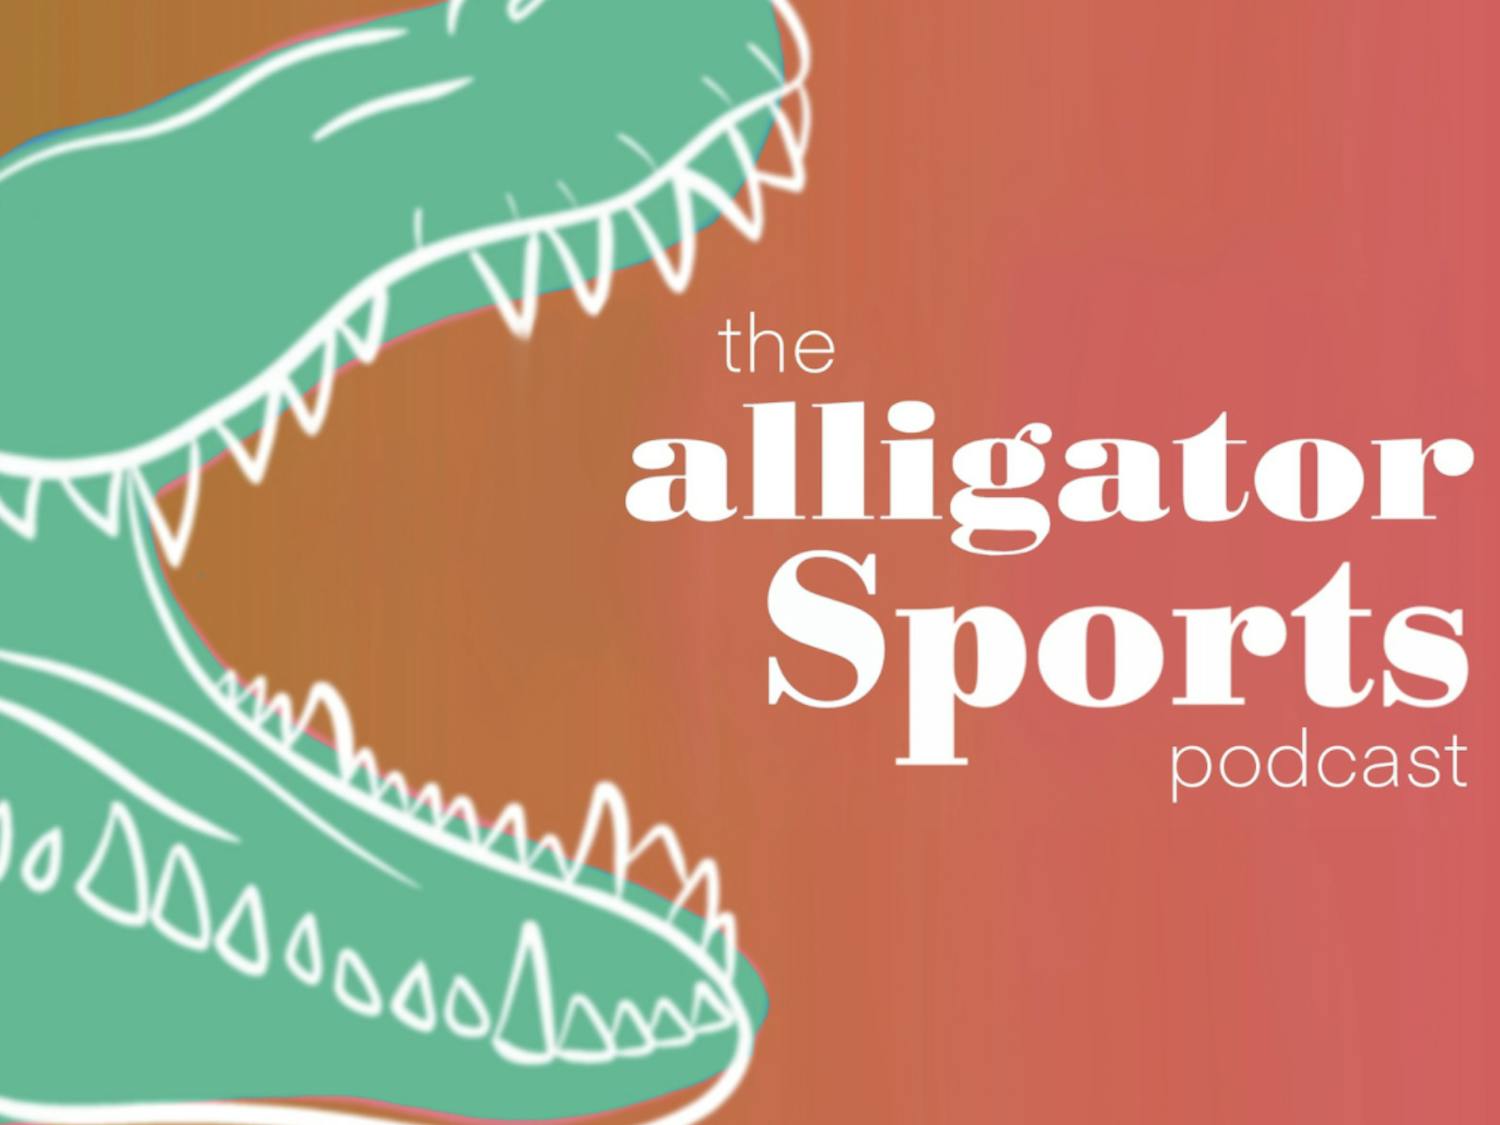 alligatorSports podcast logo.